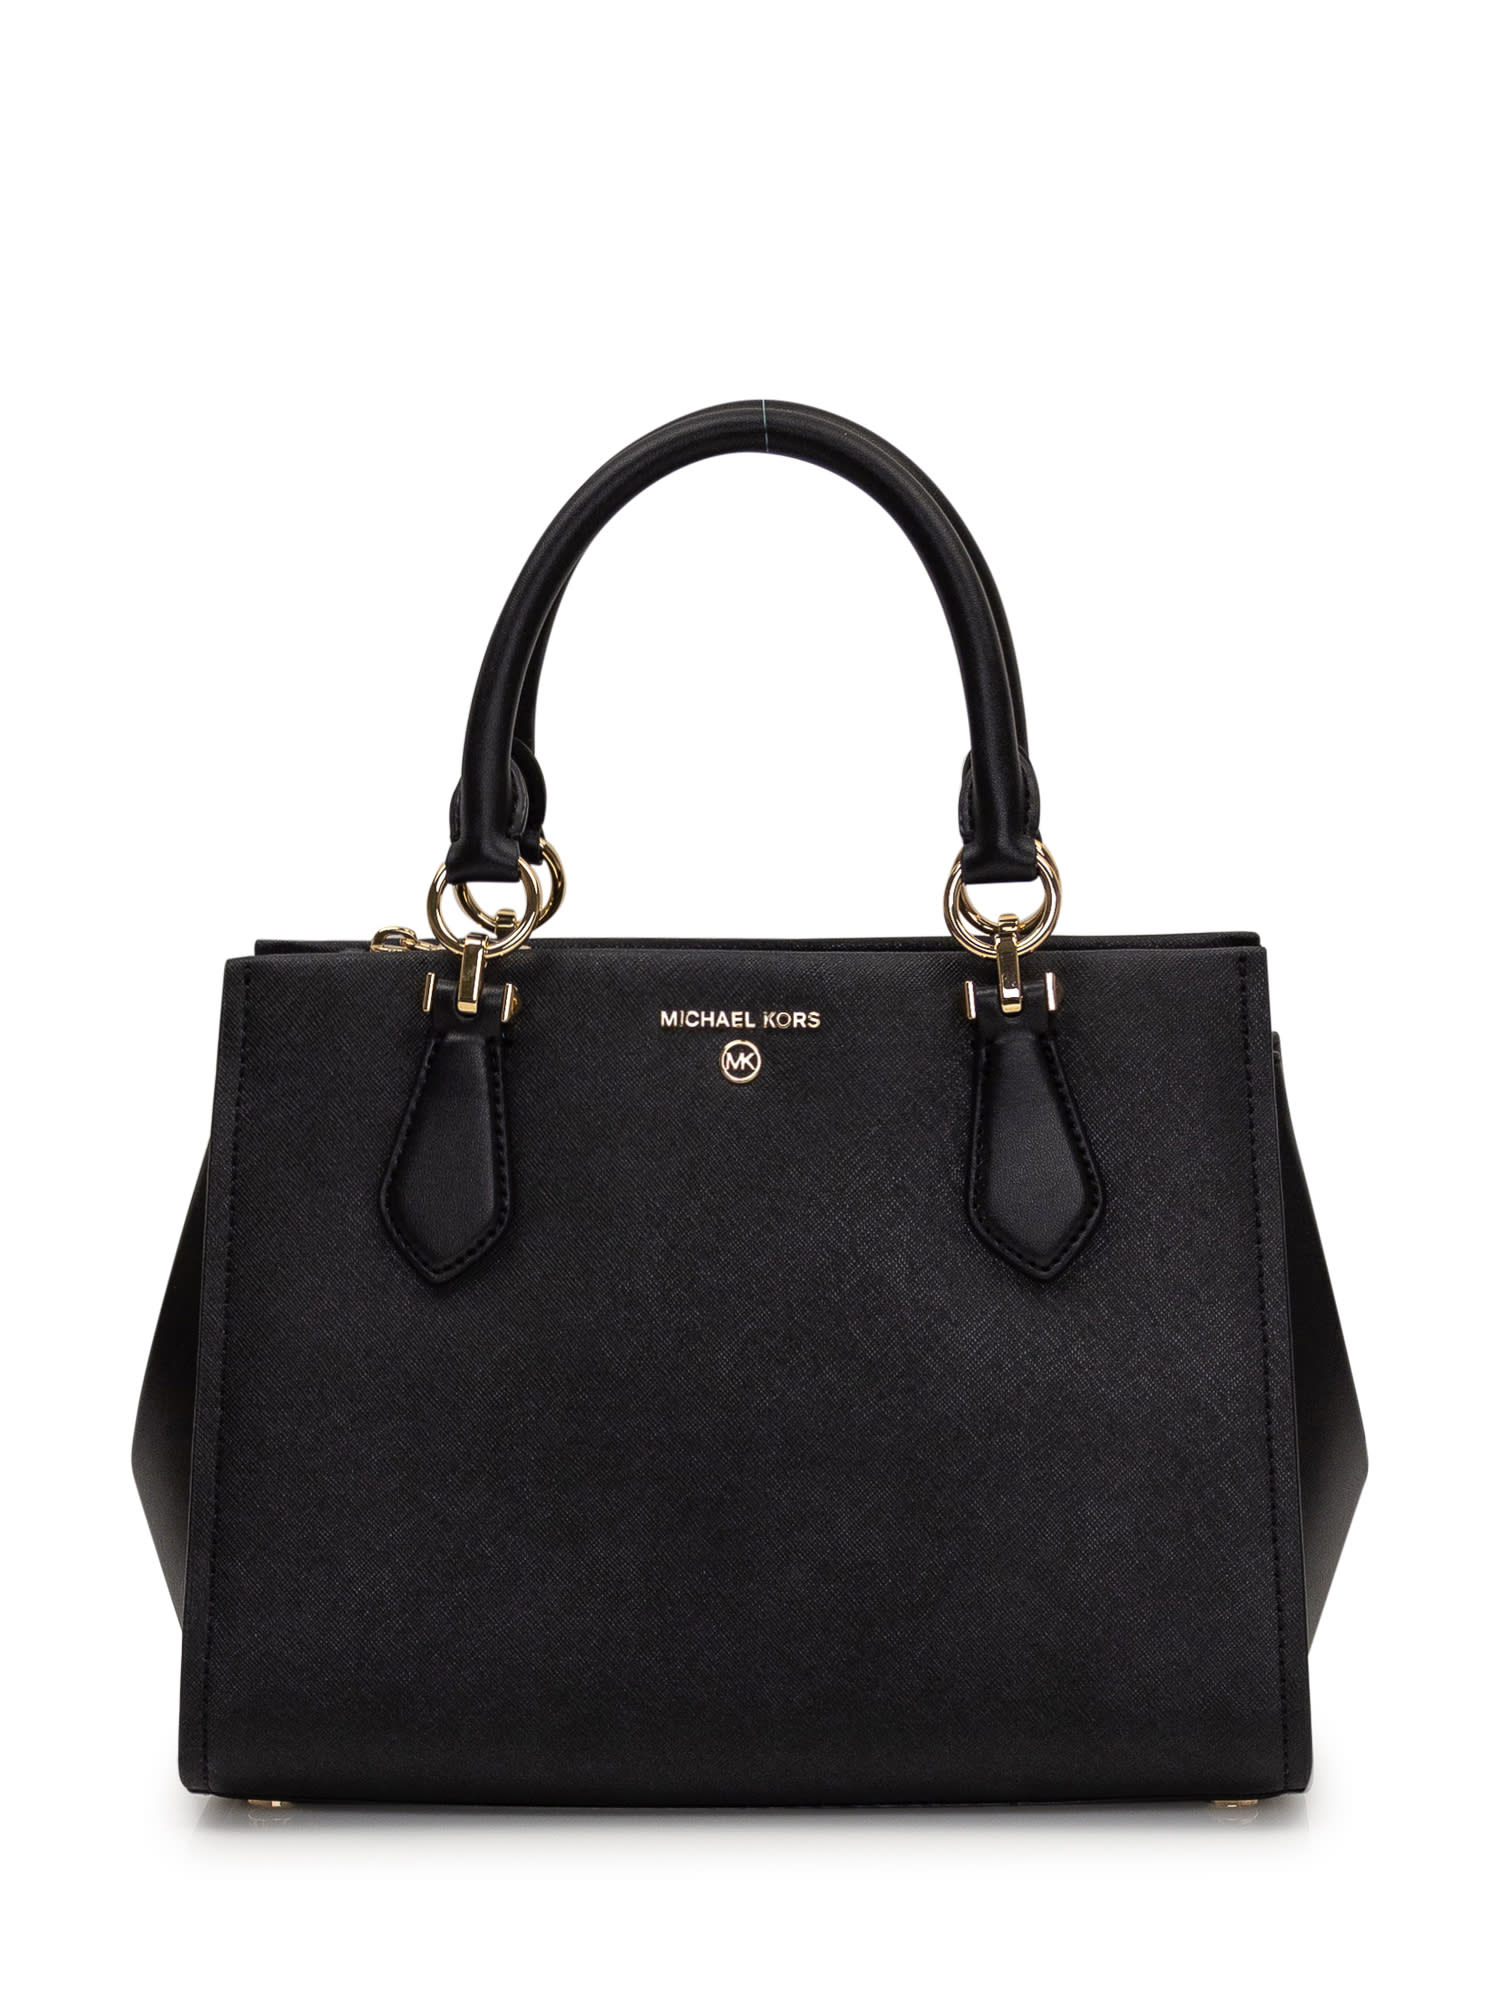 Michael Kors Black Marilyn Leather Bag